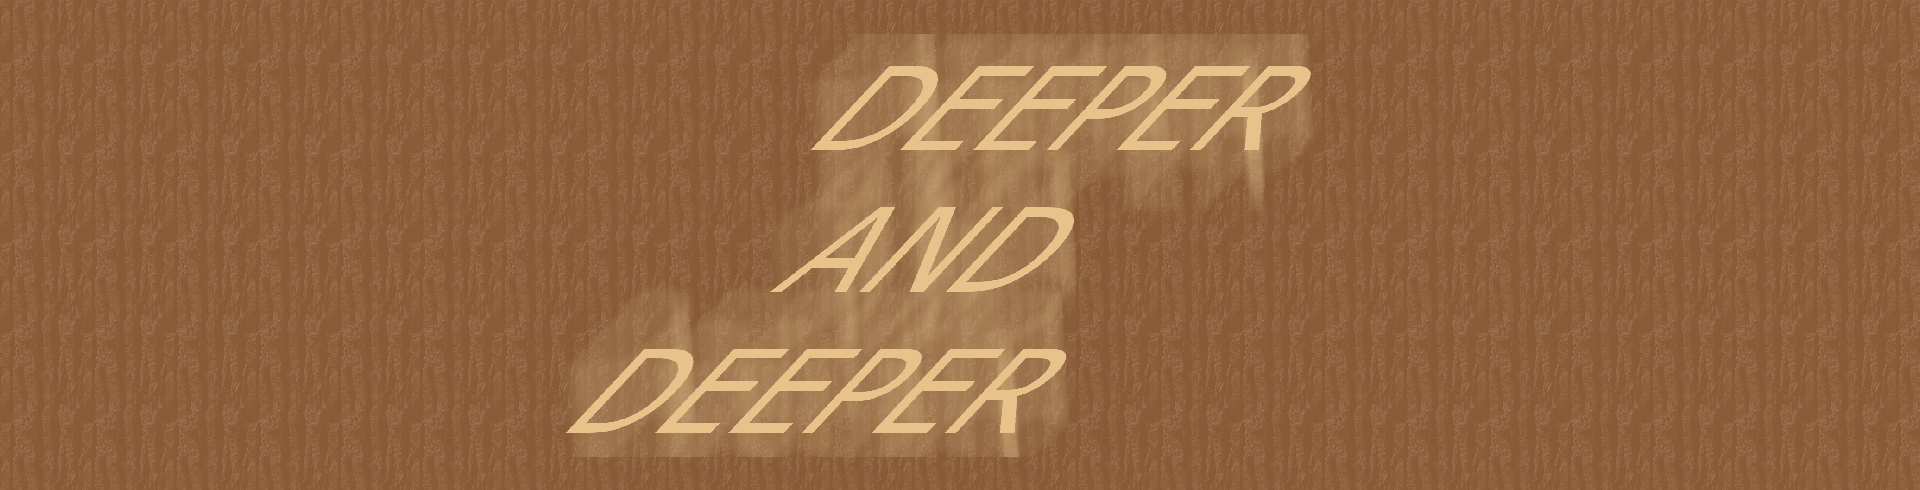 Deeper and deeper